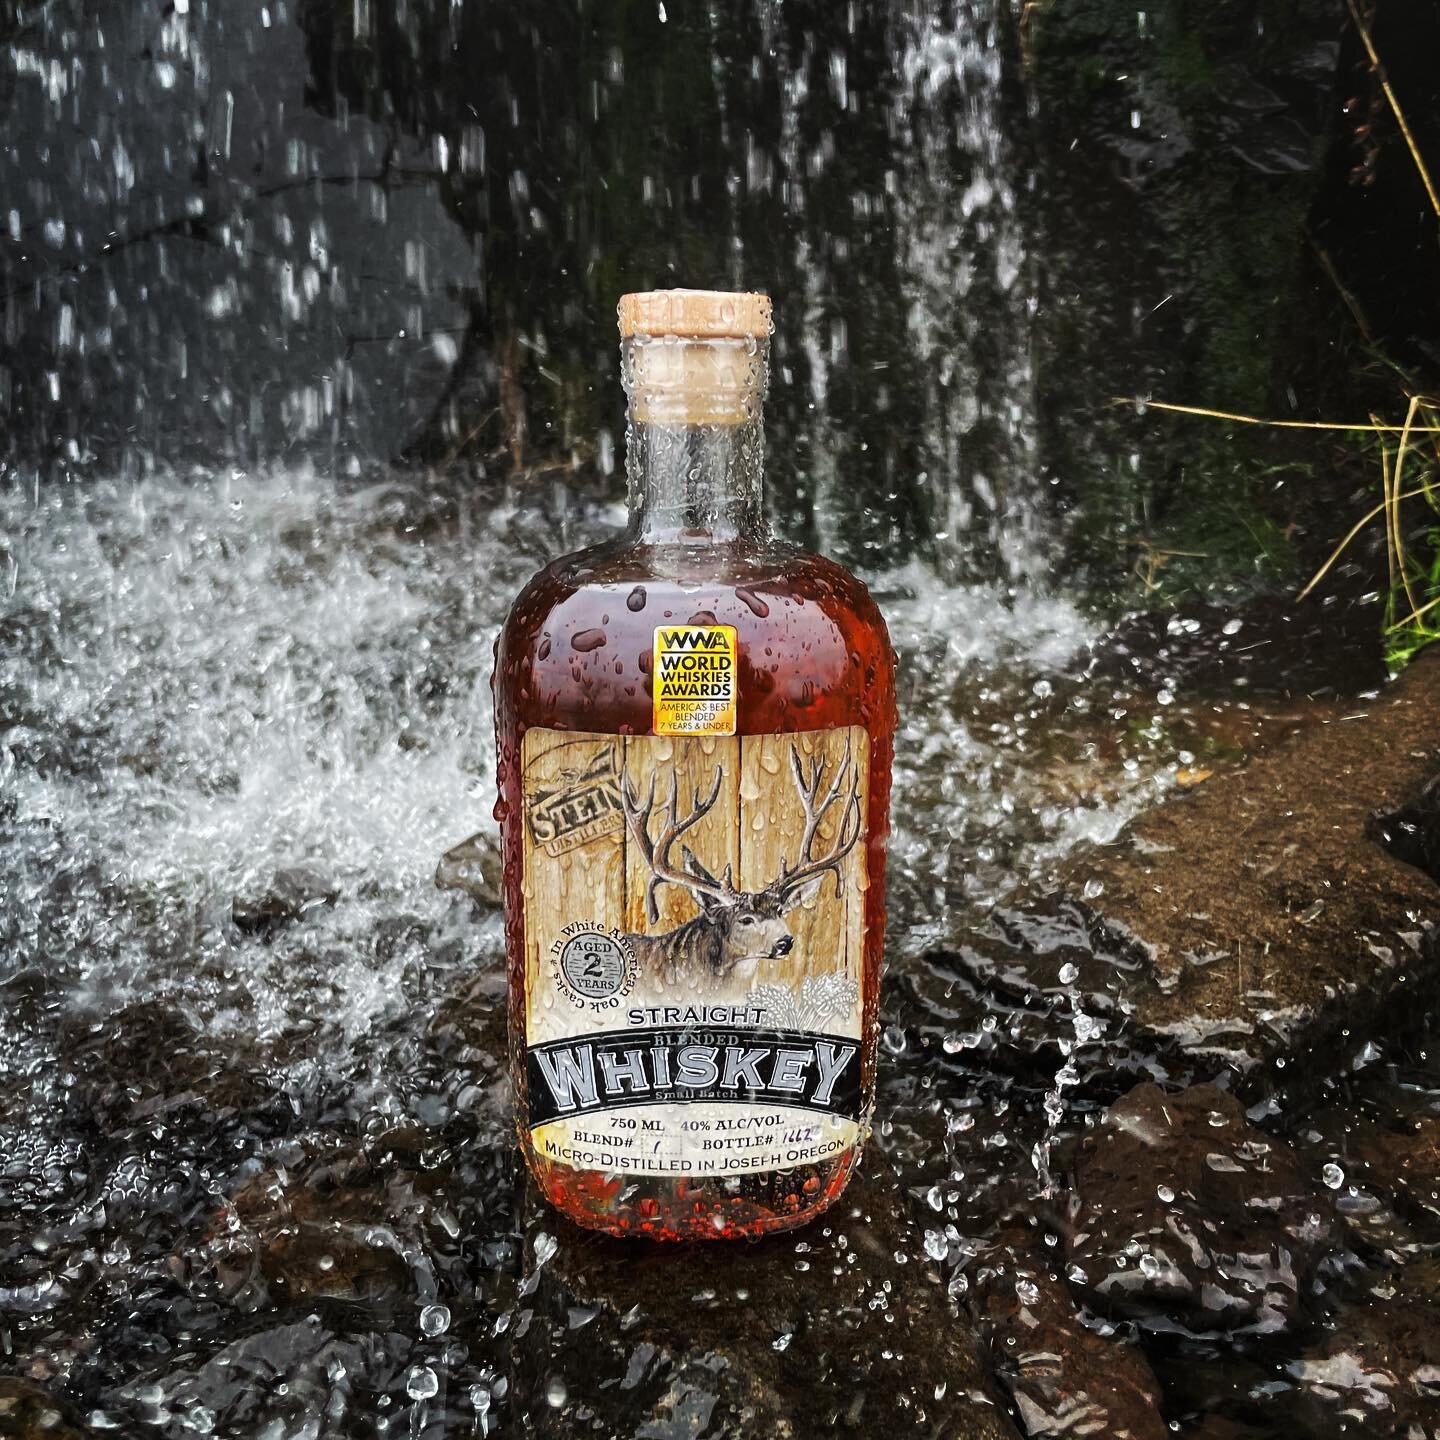 Today&rsquo;s rain is tomorrow&rsquo;s whiskey! 🥃 
.
.
.
.

#cocktails #craftspirits #whiskey #bourbon #rum #rye #vodka #blend #mix #drink #distill #artisancocktail #spiritforward #cheers  #craft #craftcocktails #tastingroom #community #josephoregon